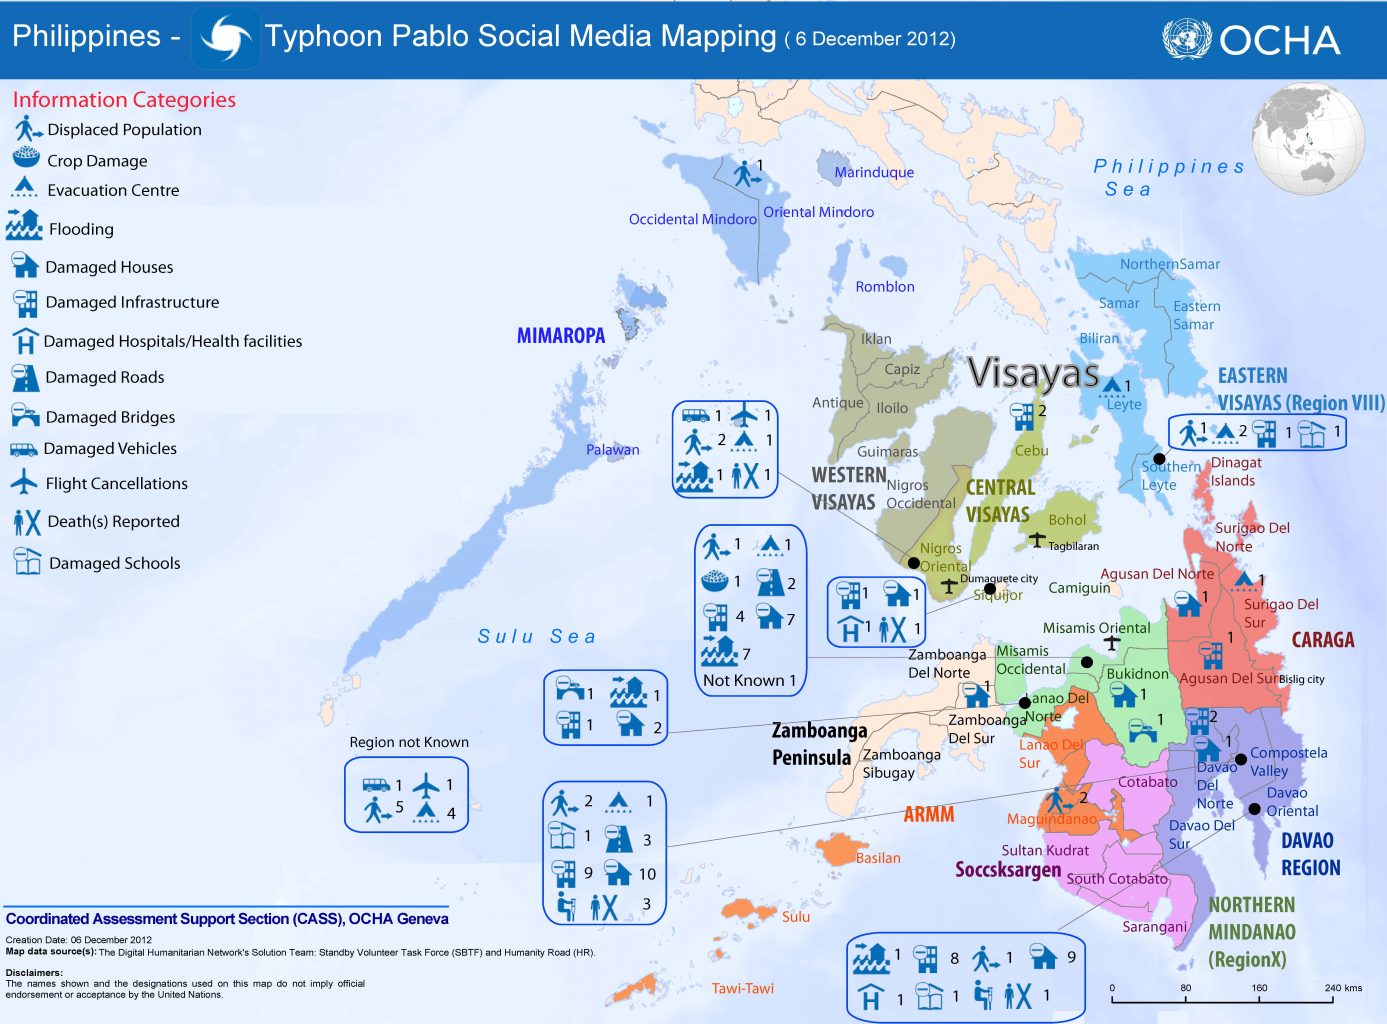 typhon-pablo_social_media_mapping-ocha_a4_portrait_6dec2012